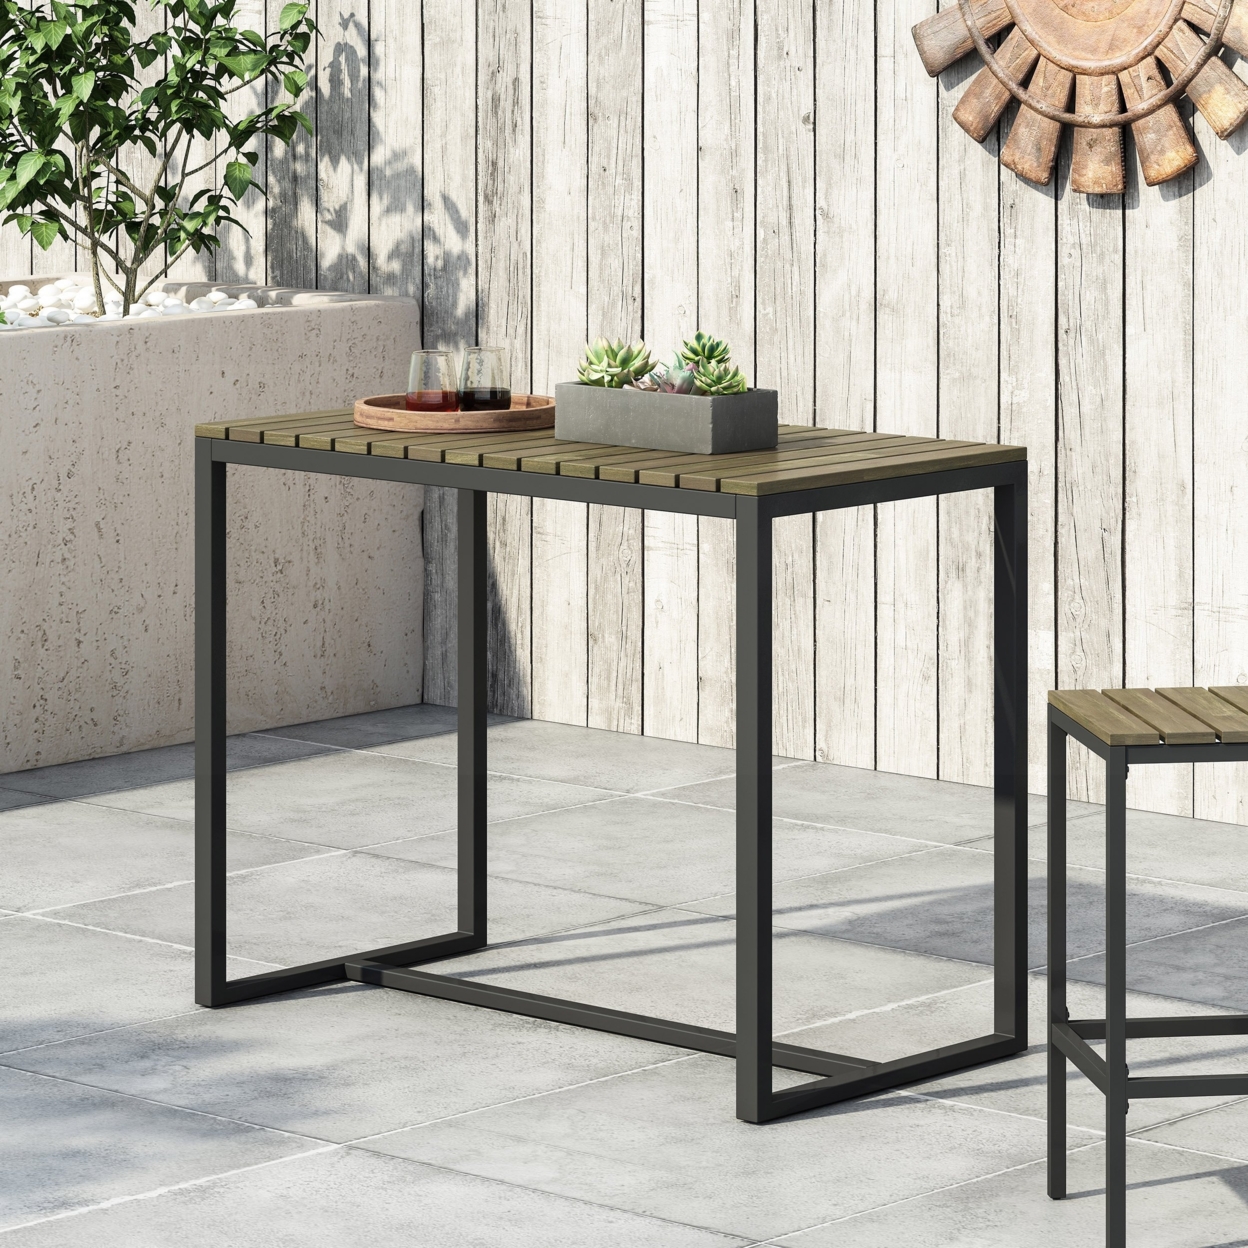 Arath Outdoor Modern Industrial Acacia Wood Bar Table - Black/gray